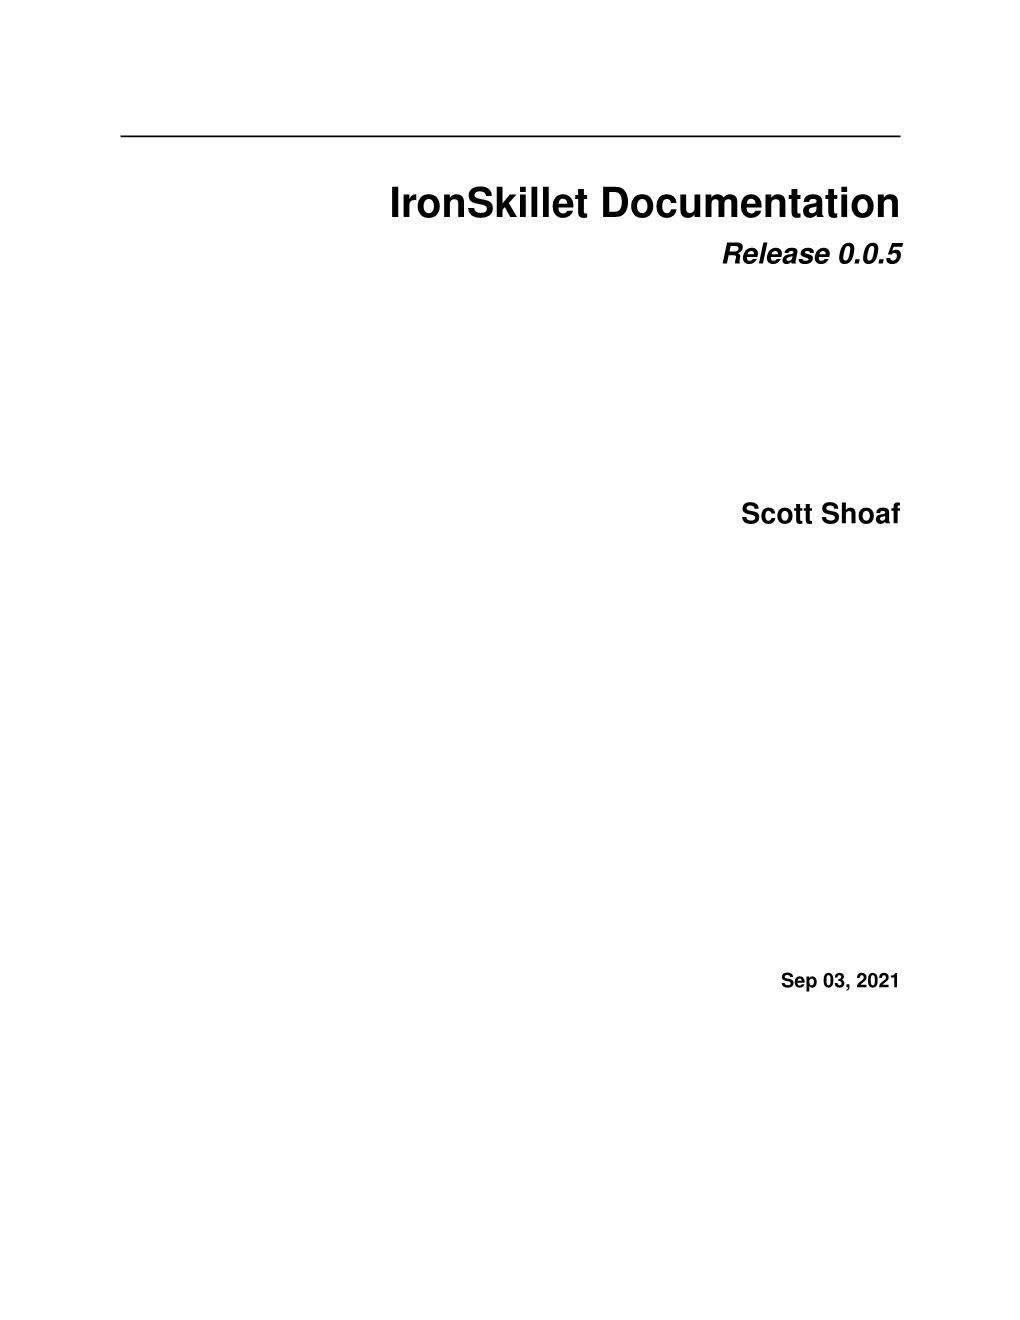 Ironskillet Documentation Release 0.0.5